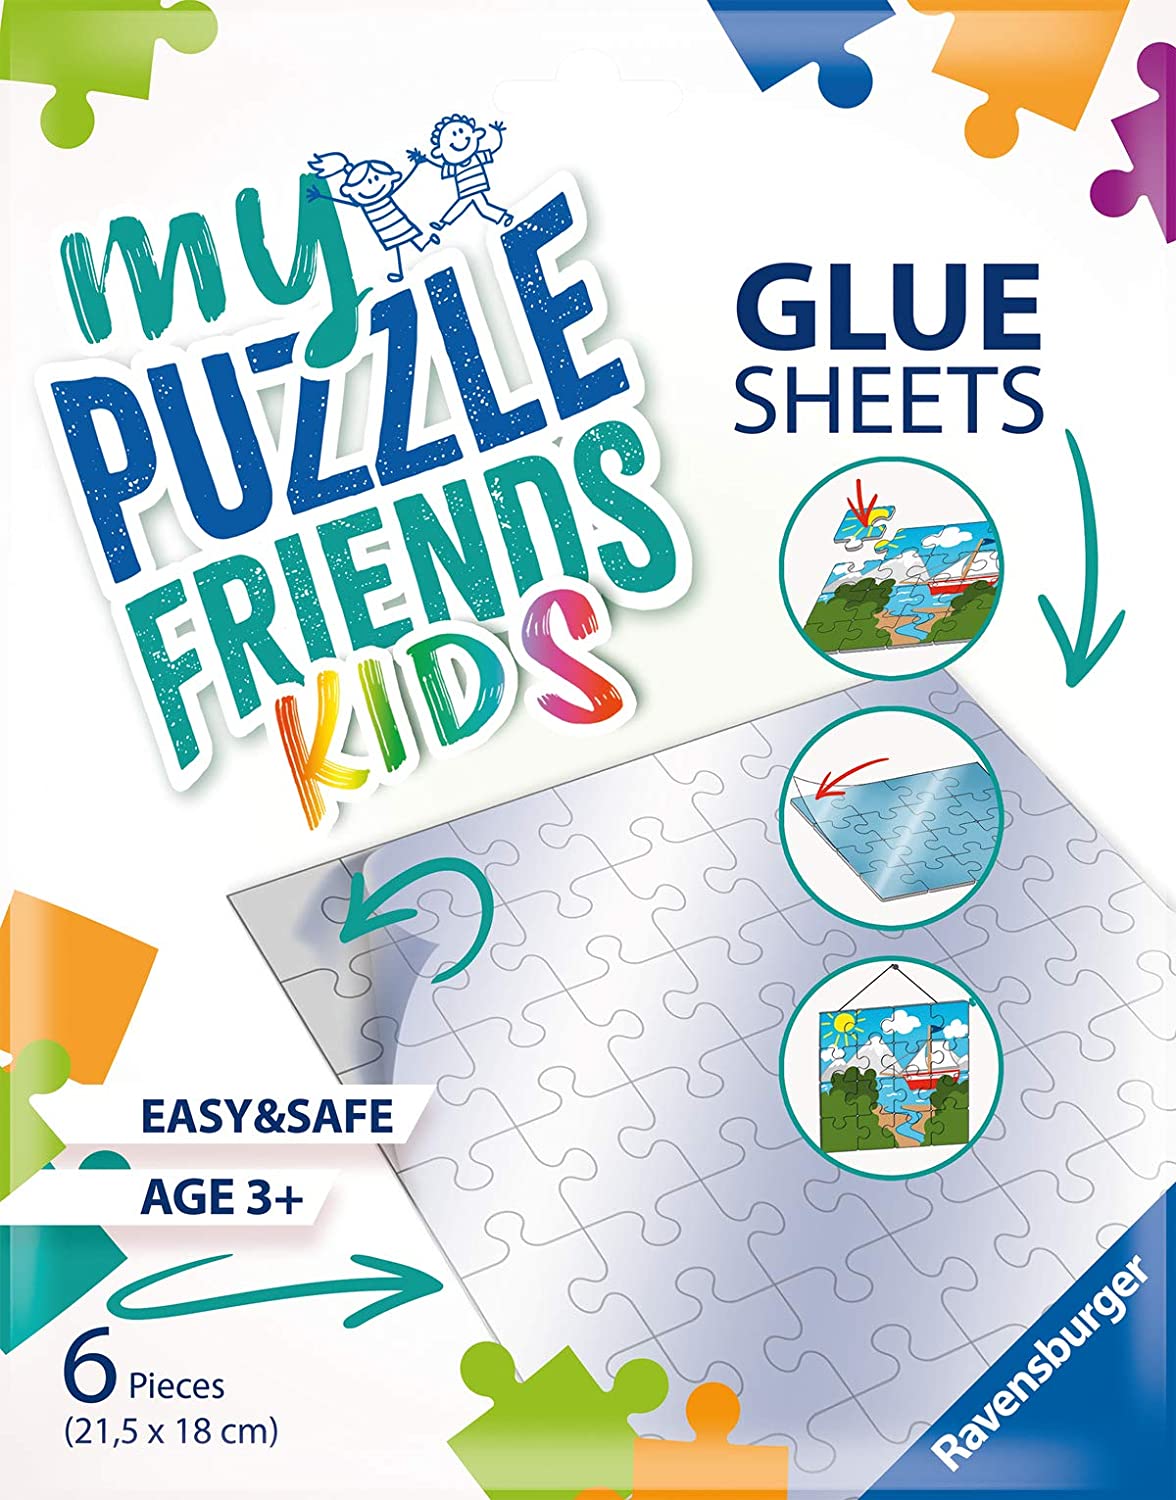 Ravensburger: My Puzzlefriends - Glue Sheets